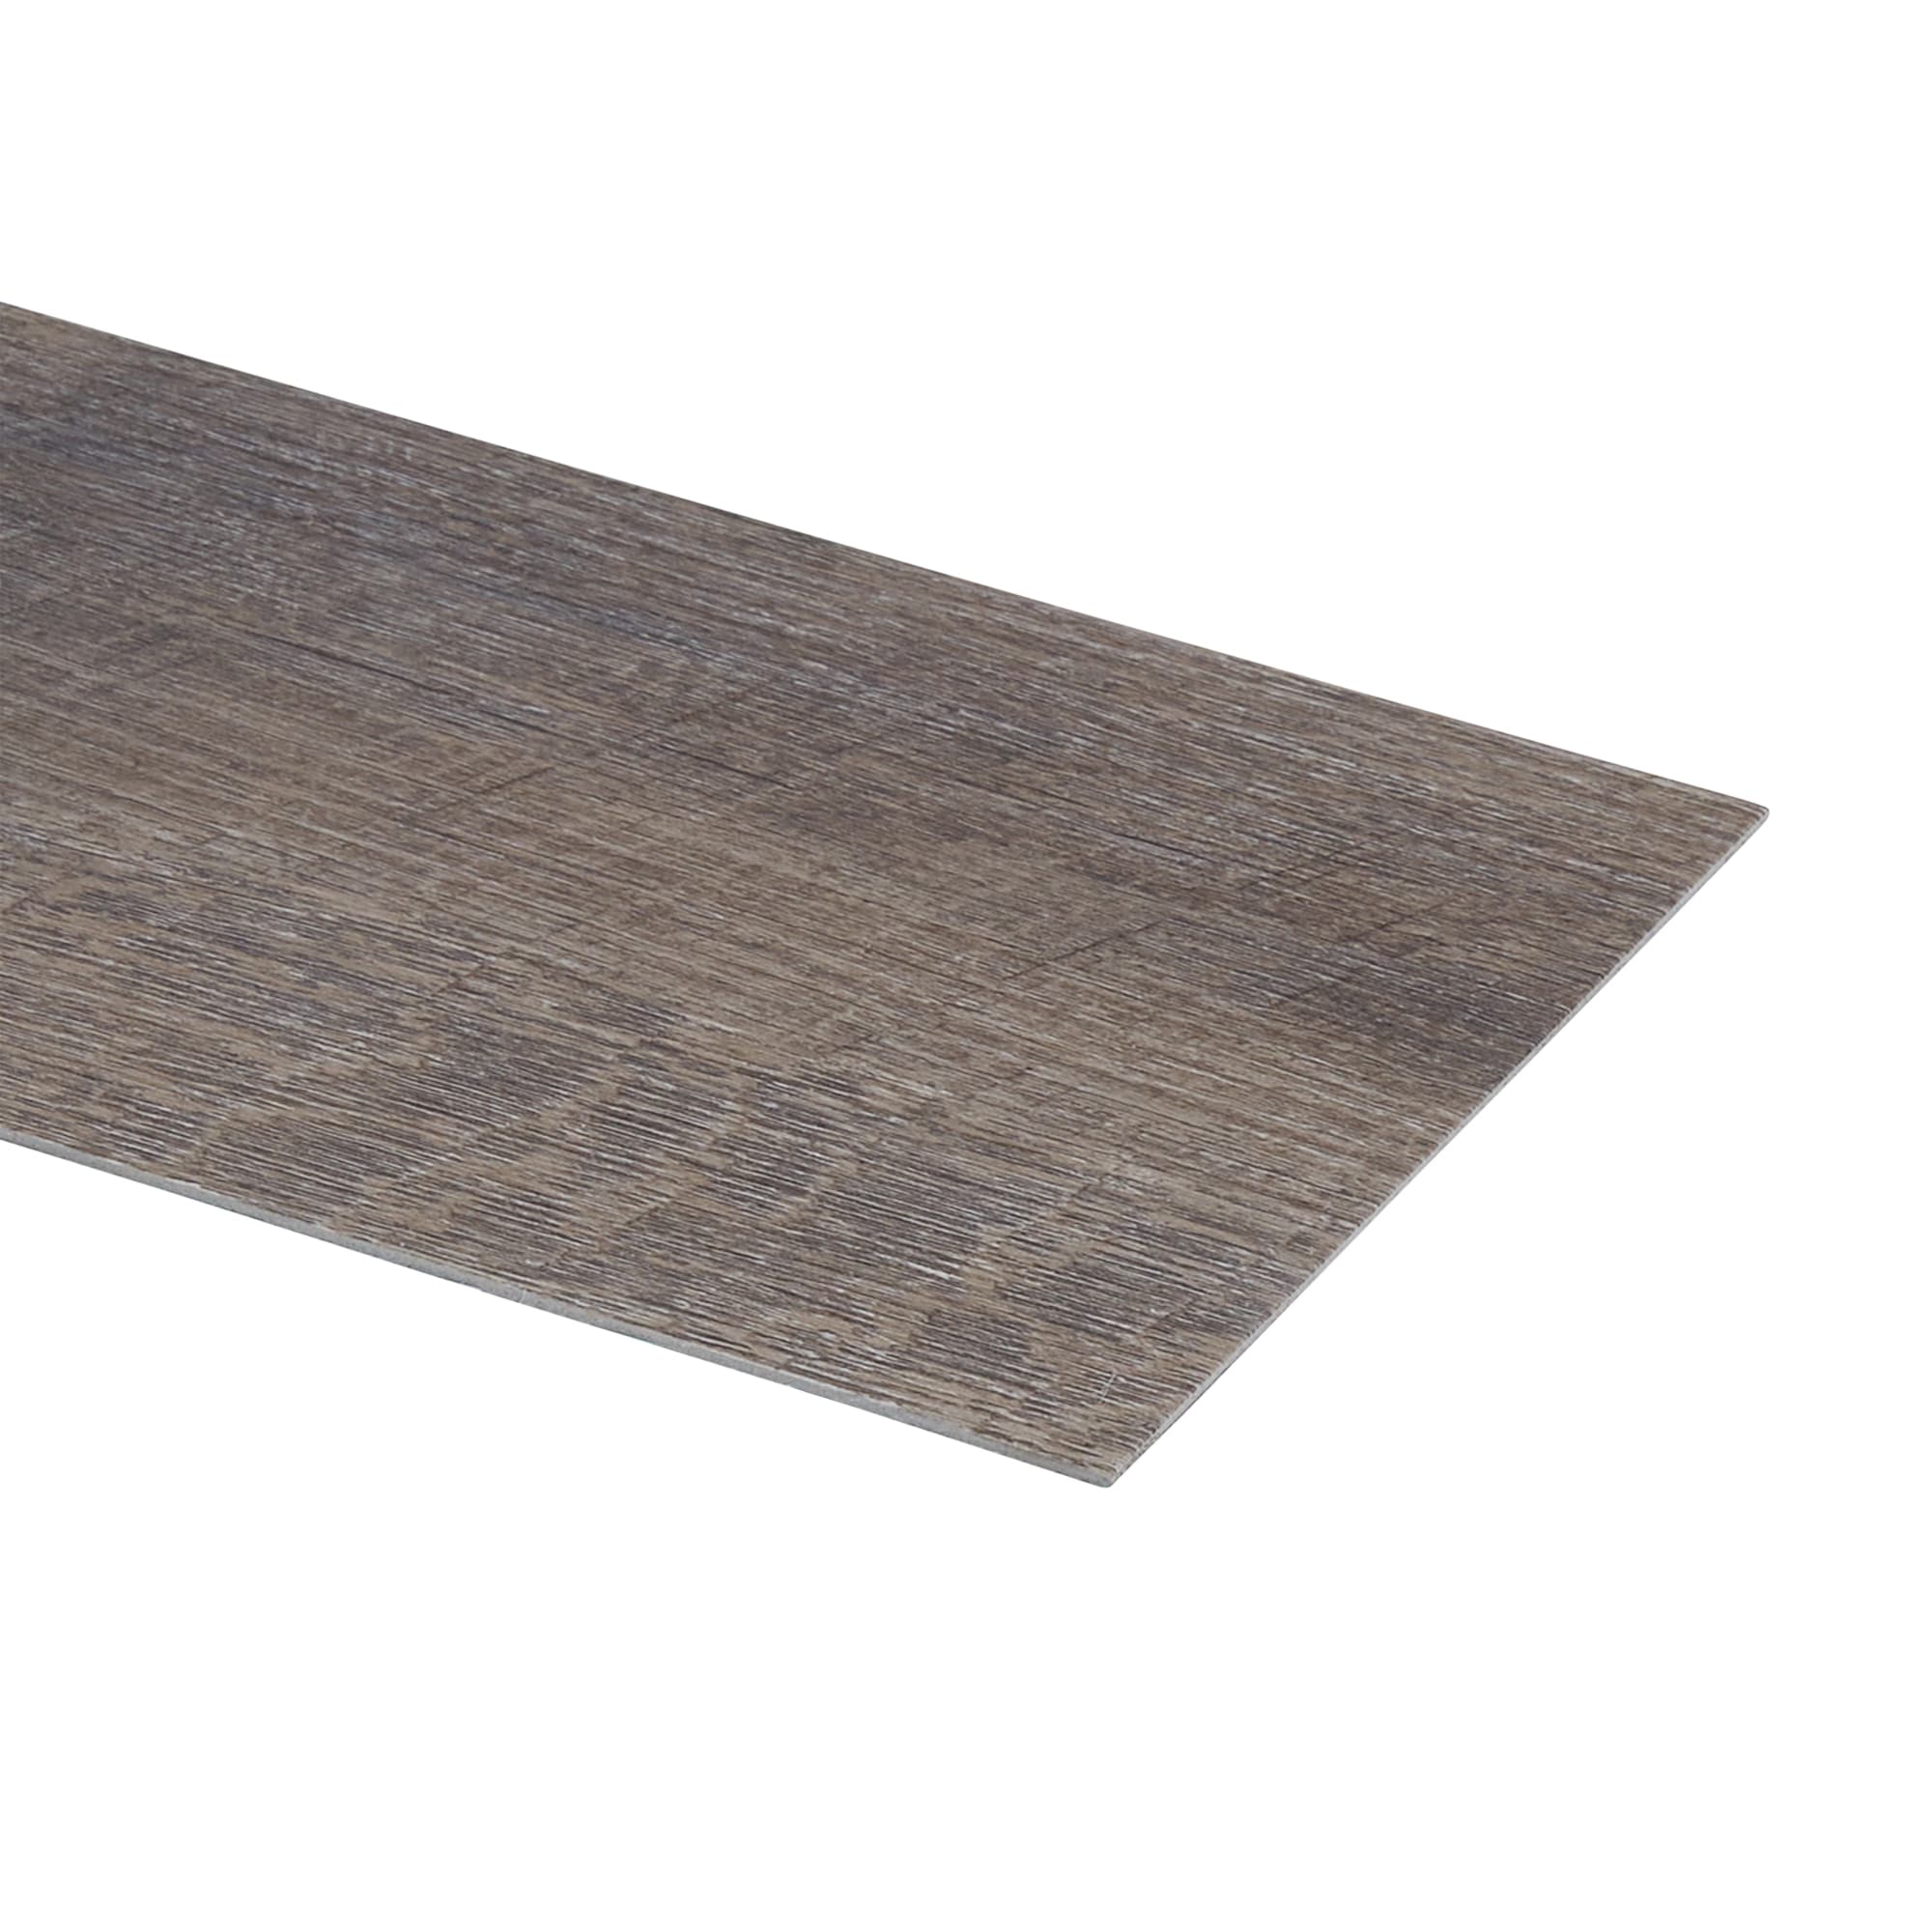 Buy 3mm White Oak Wood Effect Self Adhesive Vinyl Plank Flooring Premium  Luxury Vinyl Tile Herringbone Lvt Lvp from Zhejiang Hoy Technology Co.,  Ltd., China